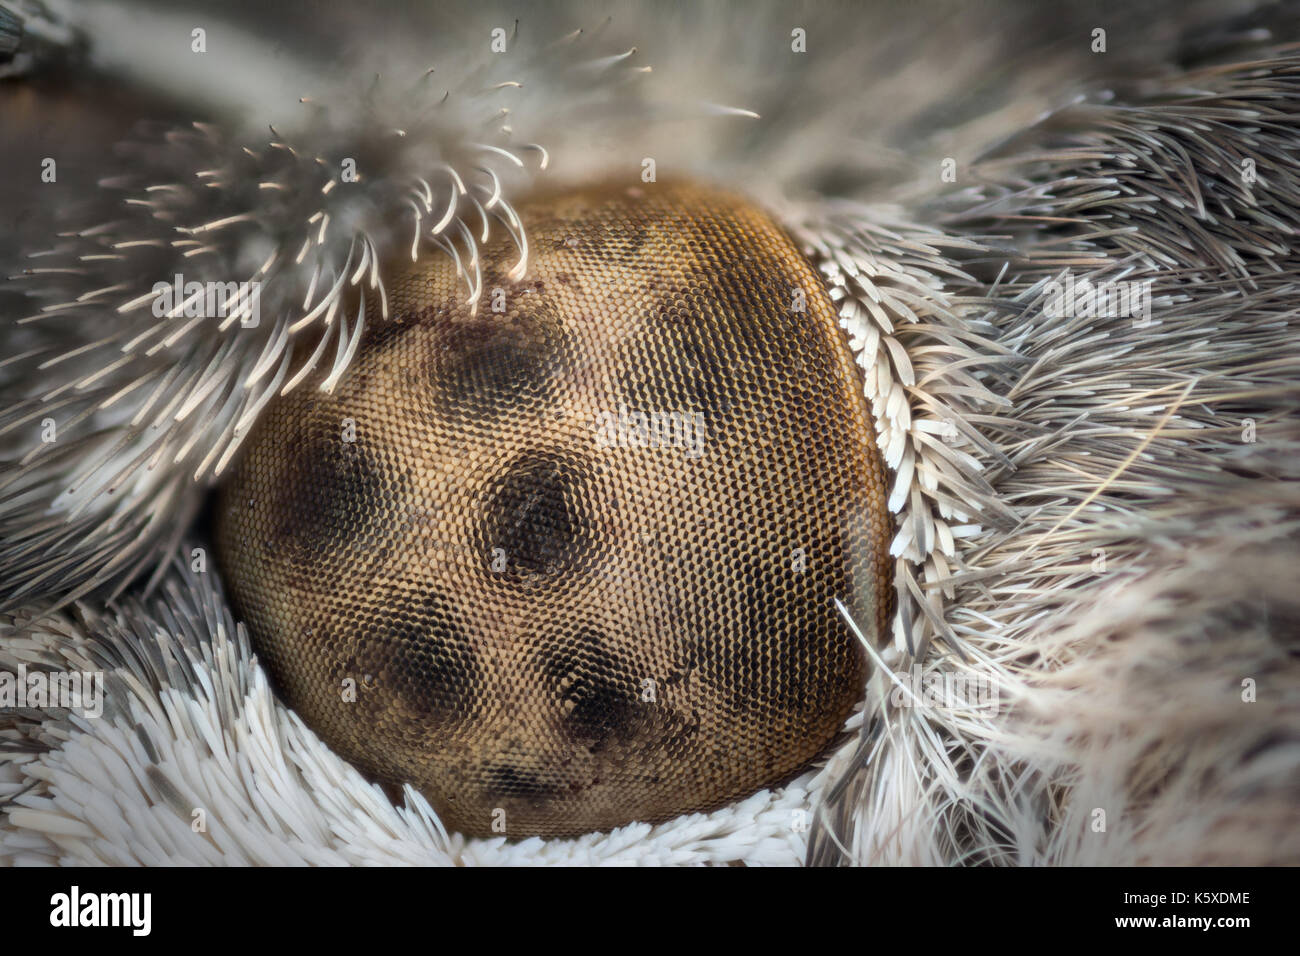 detail of eye of moth macro or micro photography Stock Photo